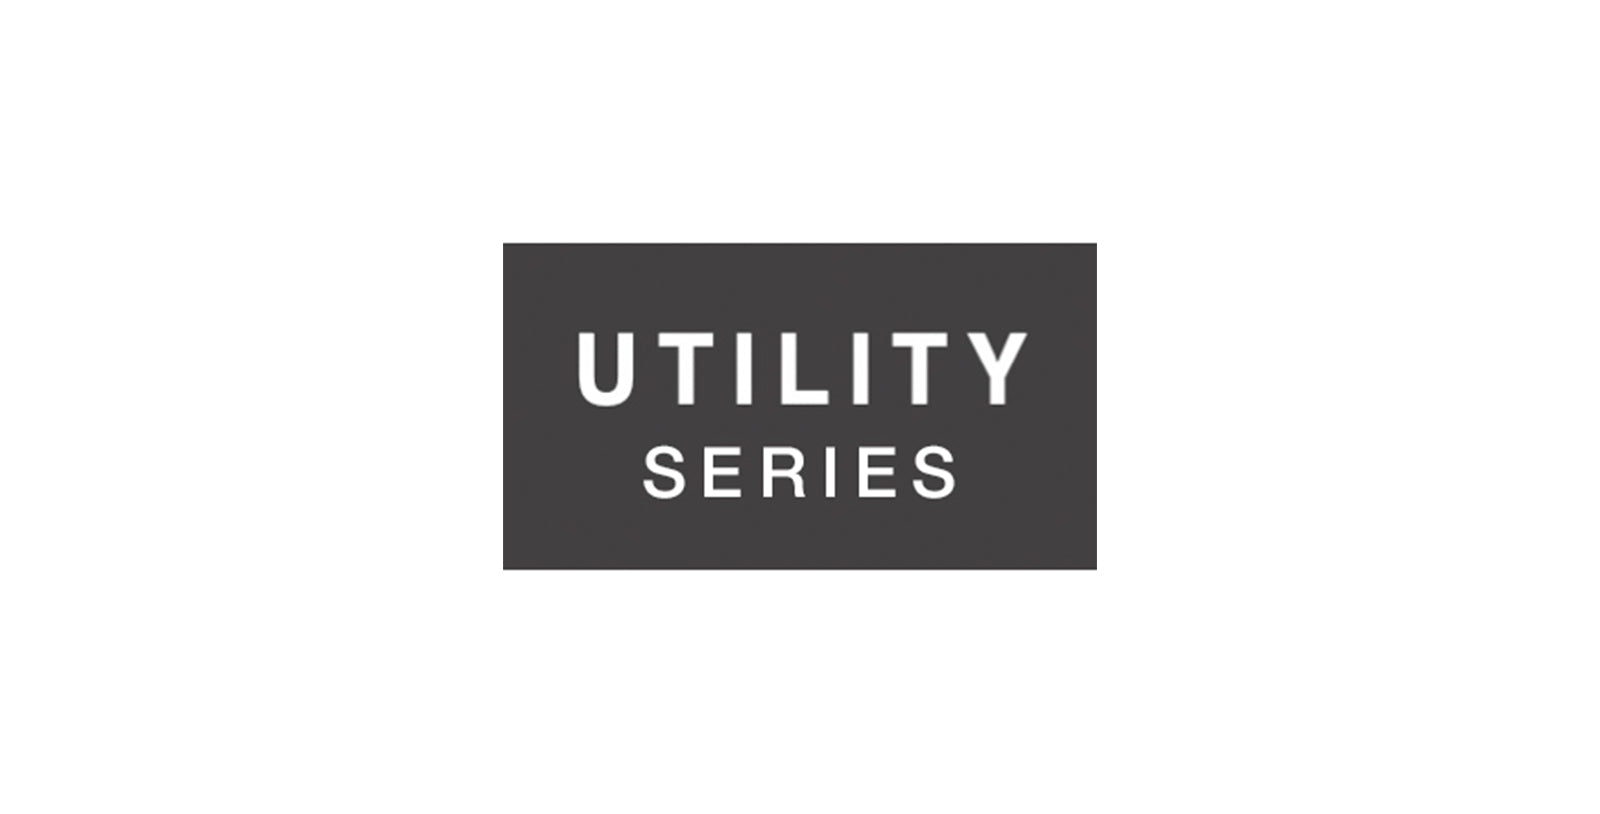 Introducing: Koss Utility Series